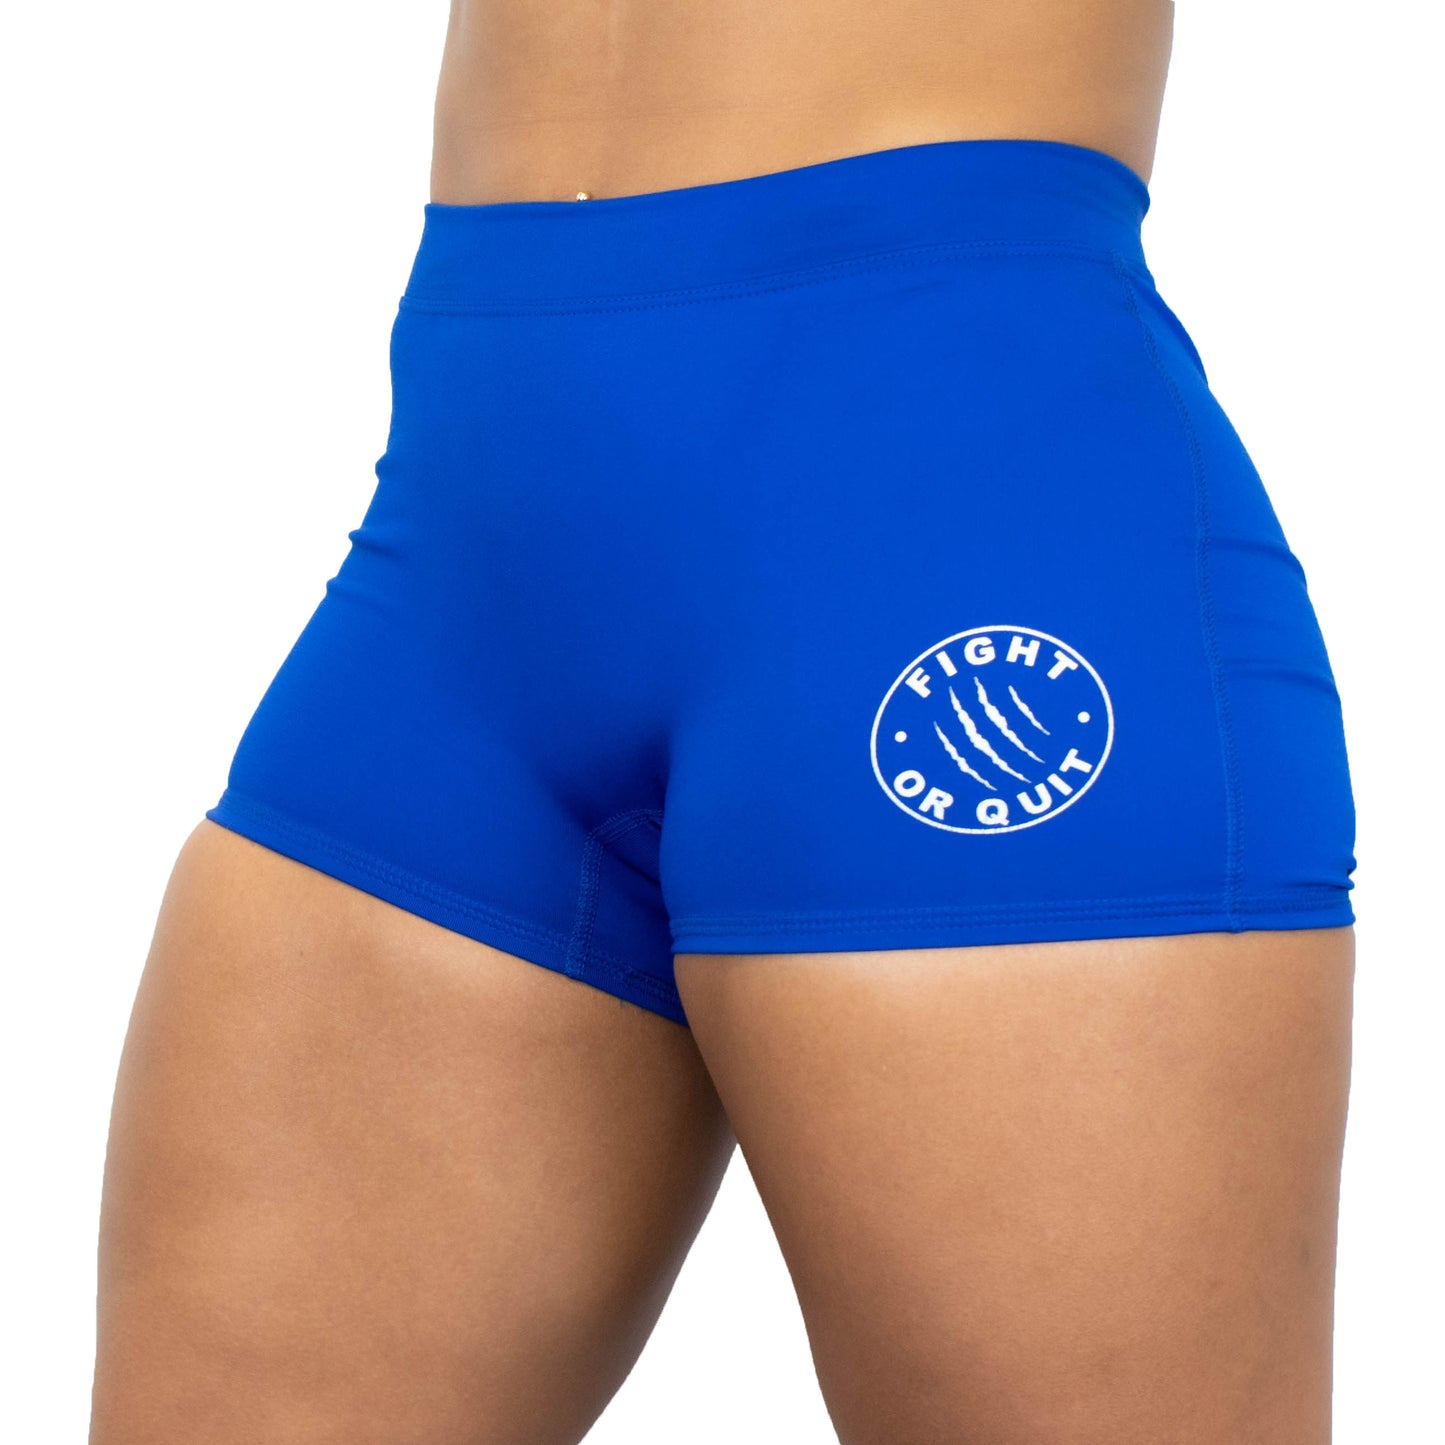 Women's Blue Compression Shorts